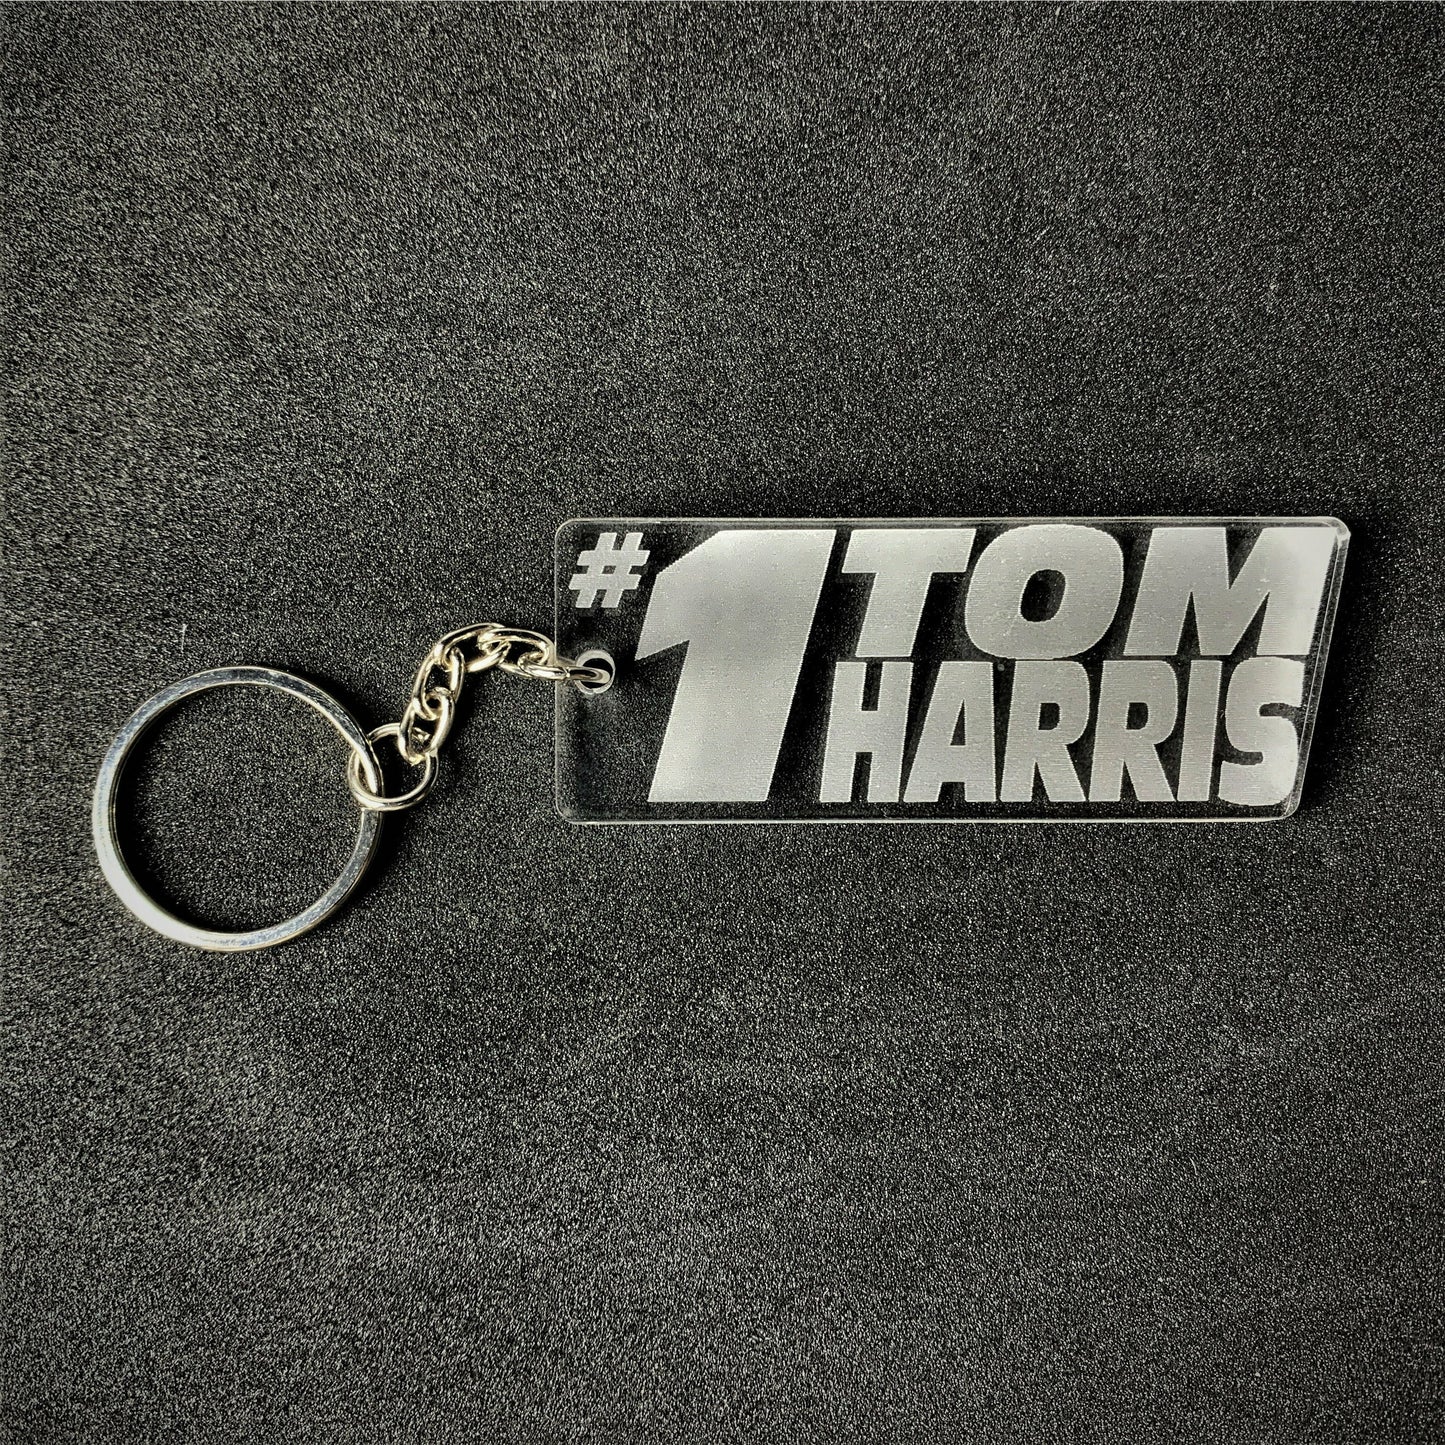 #1 Tom Harris Key Ring - Key Ring - Stock Car & Banger Toy Tracks